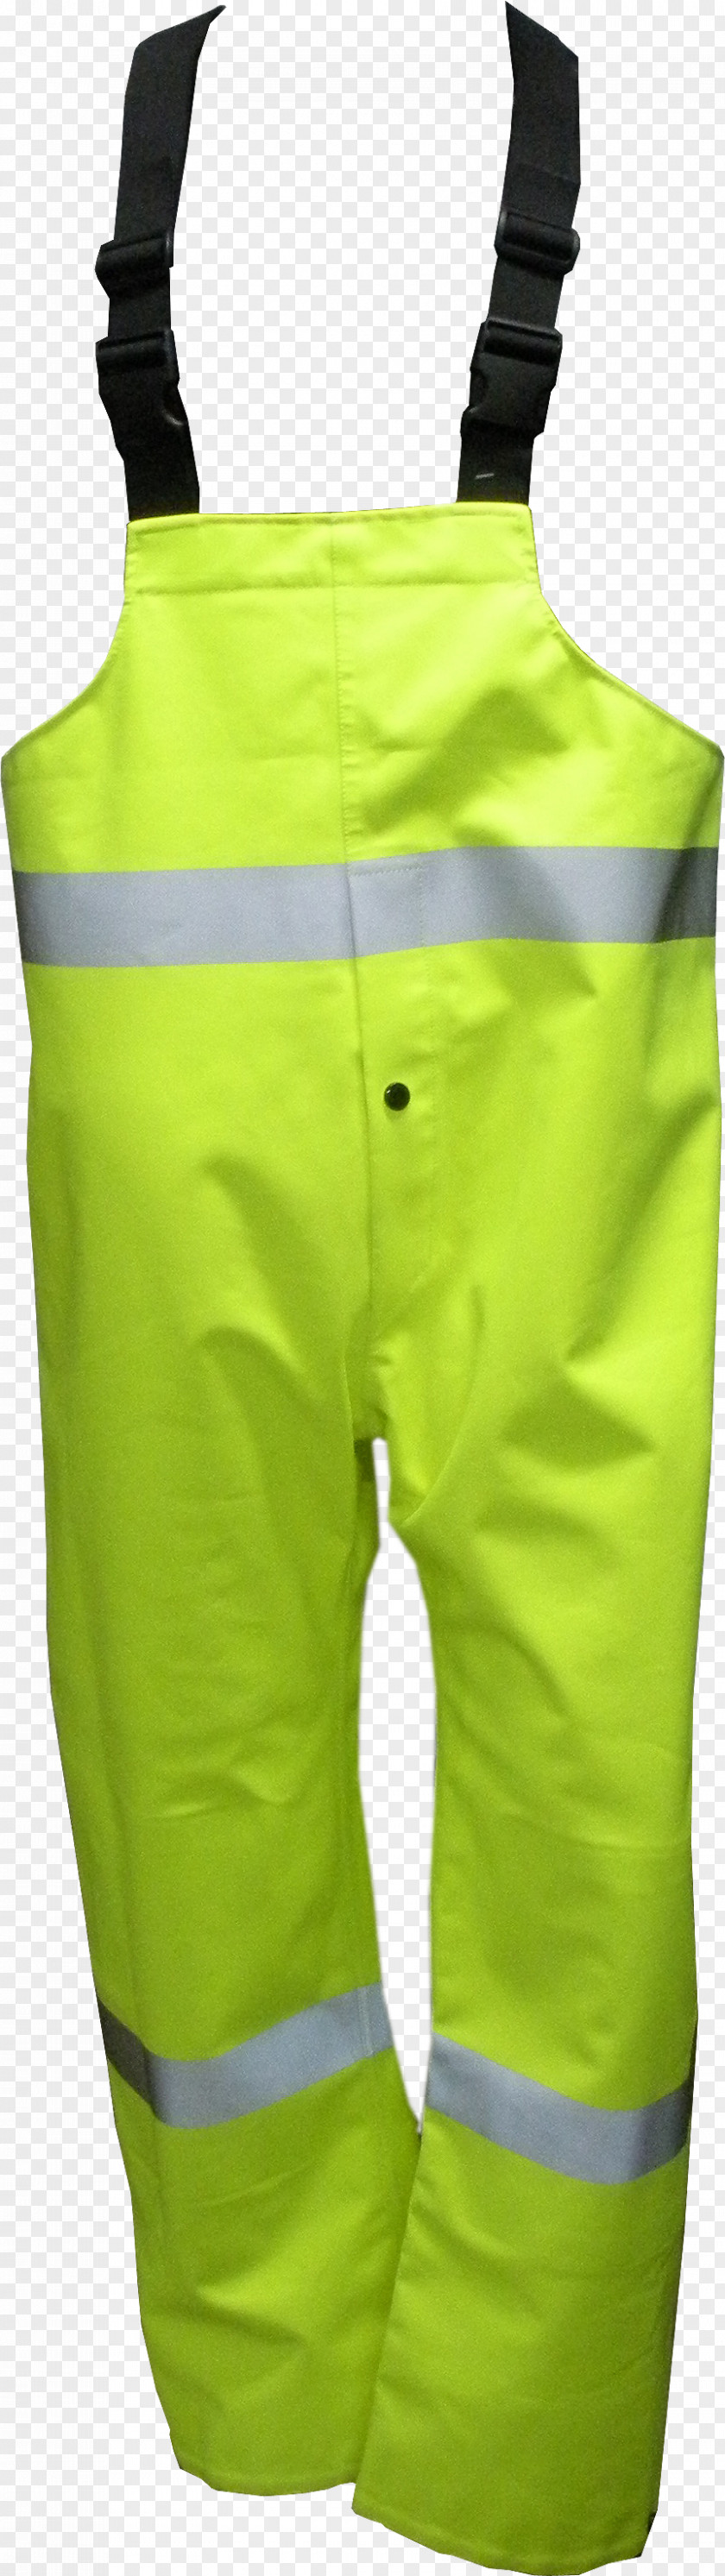 Jacket Bib Pants Personal Protective Equipment Clothing PNG